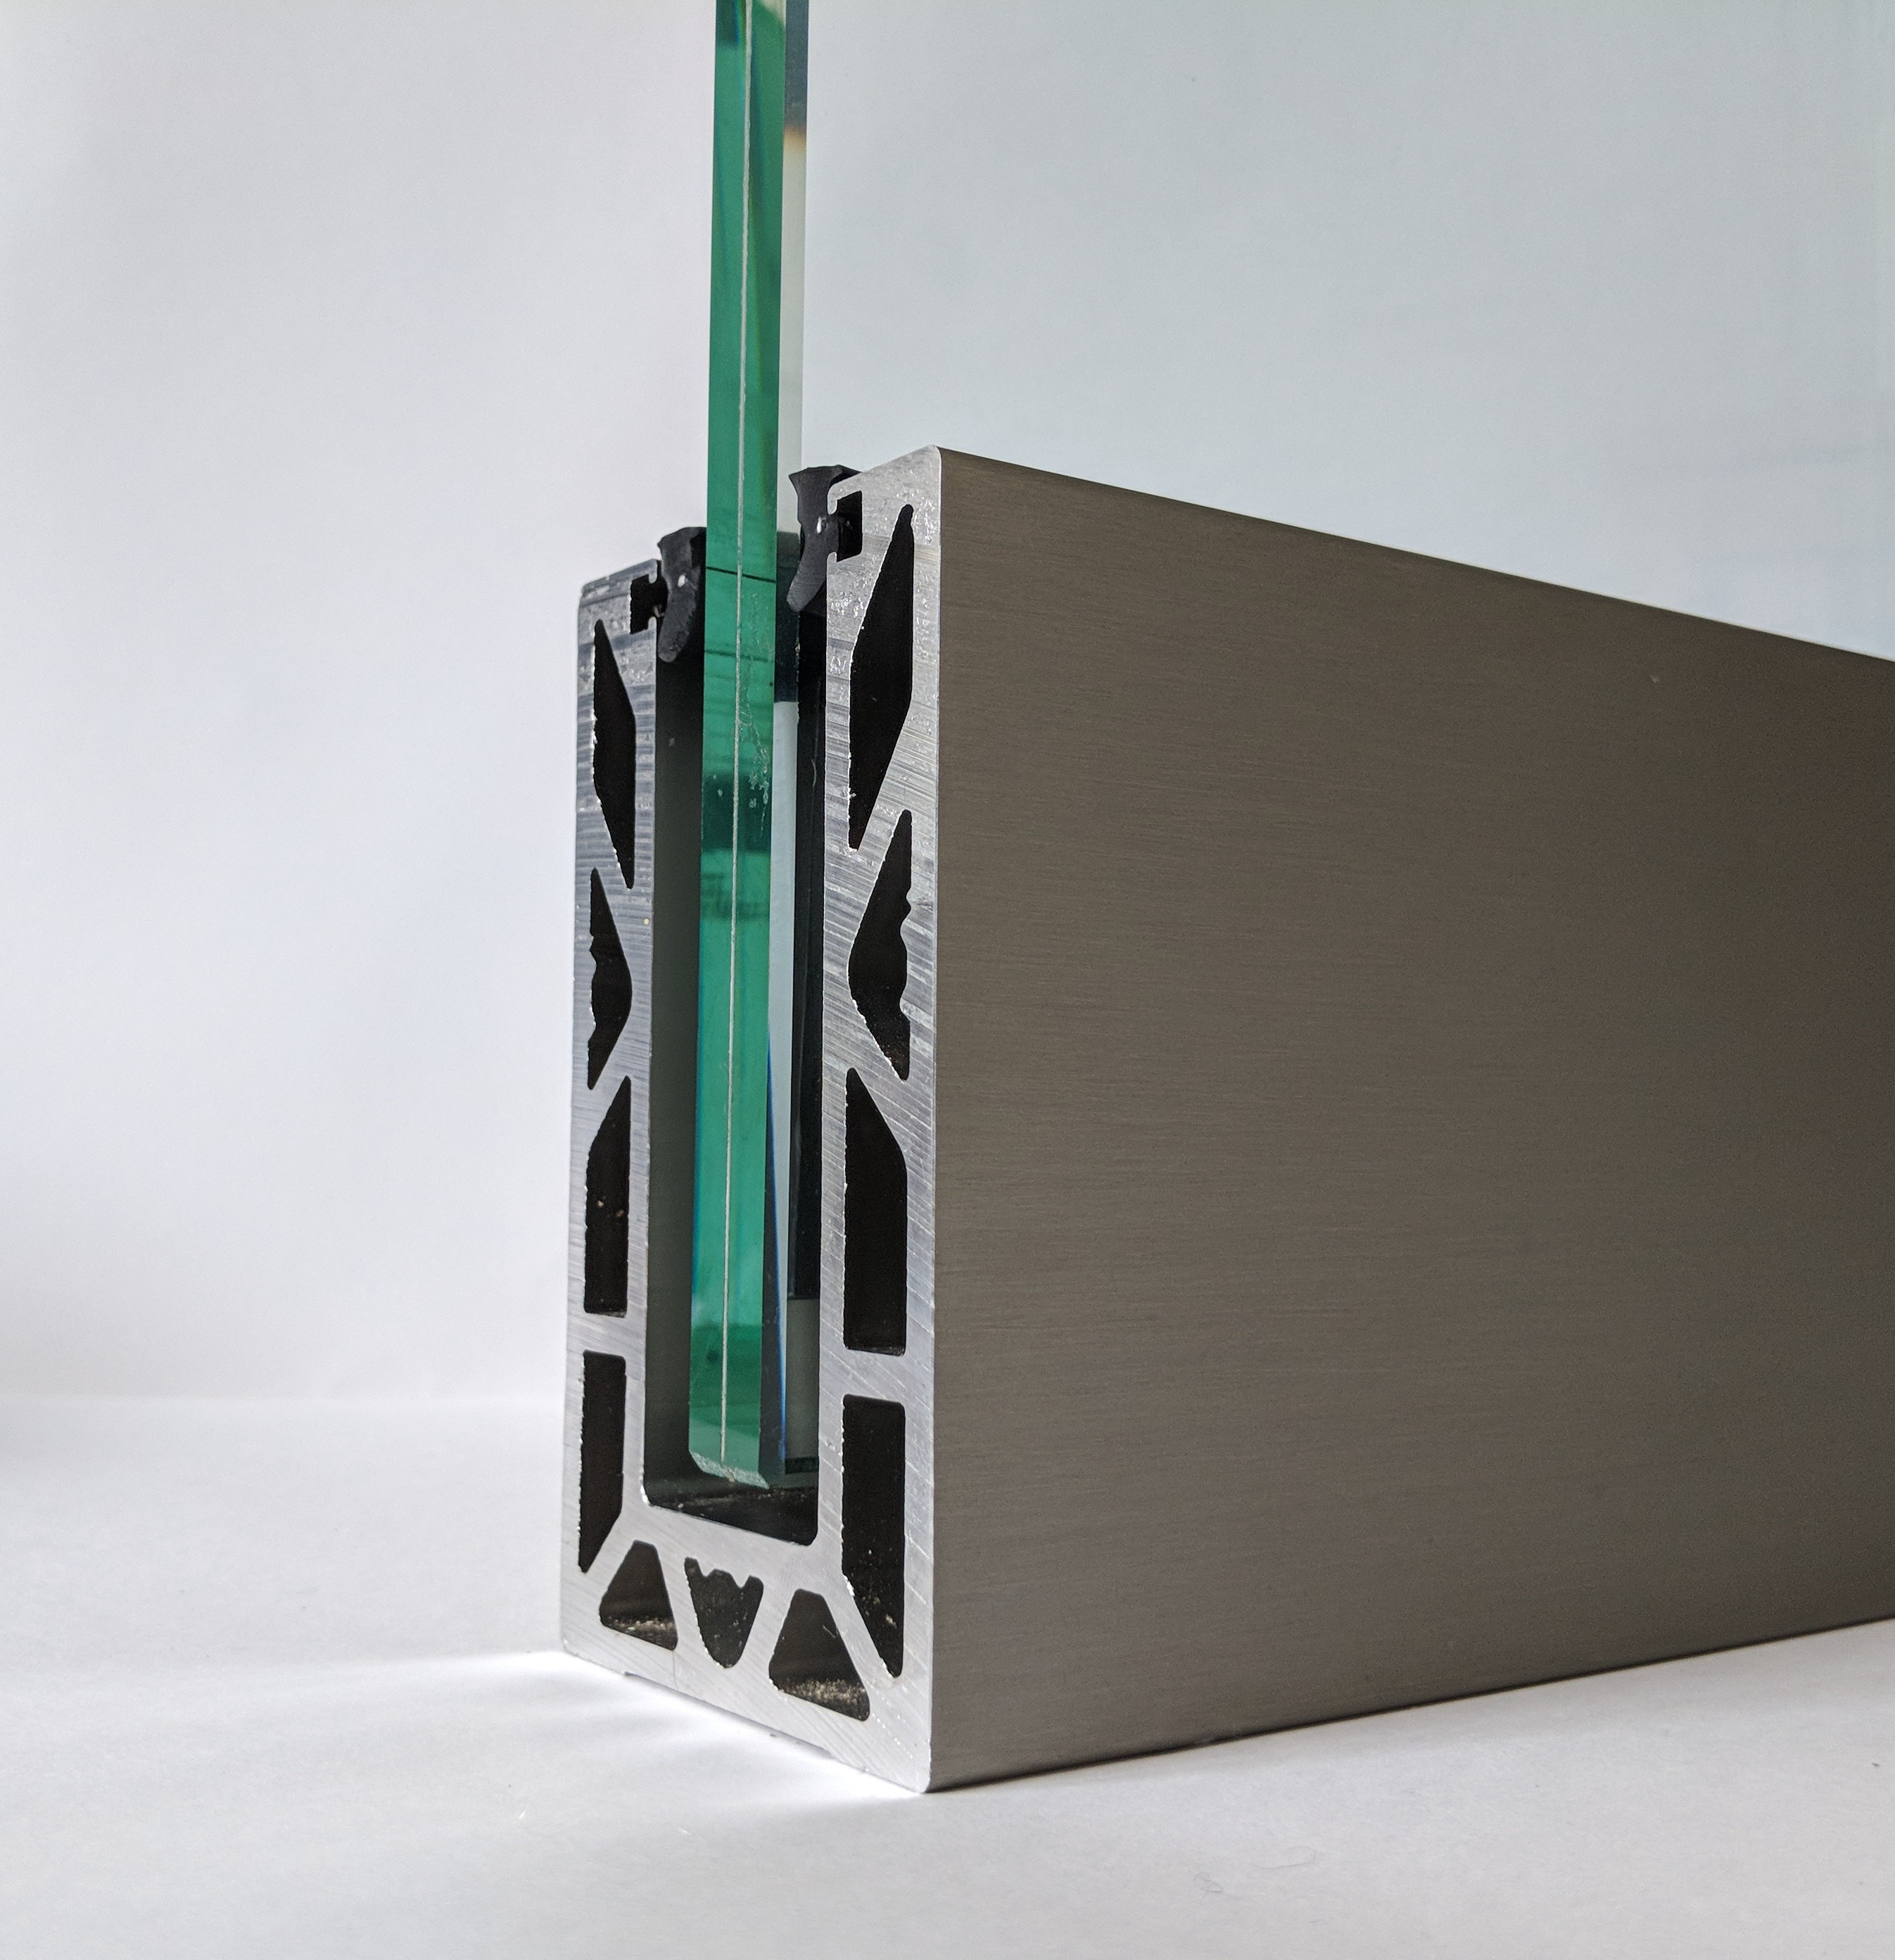 open end of solus frameless glass balustrade system from aluminox